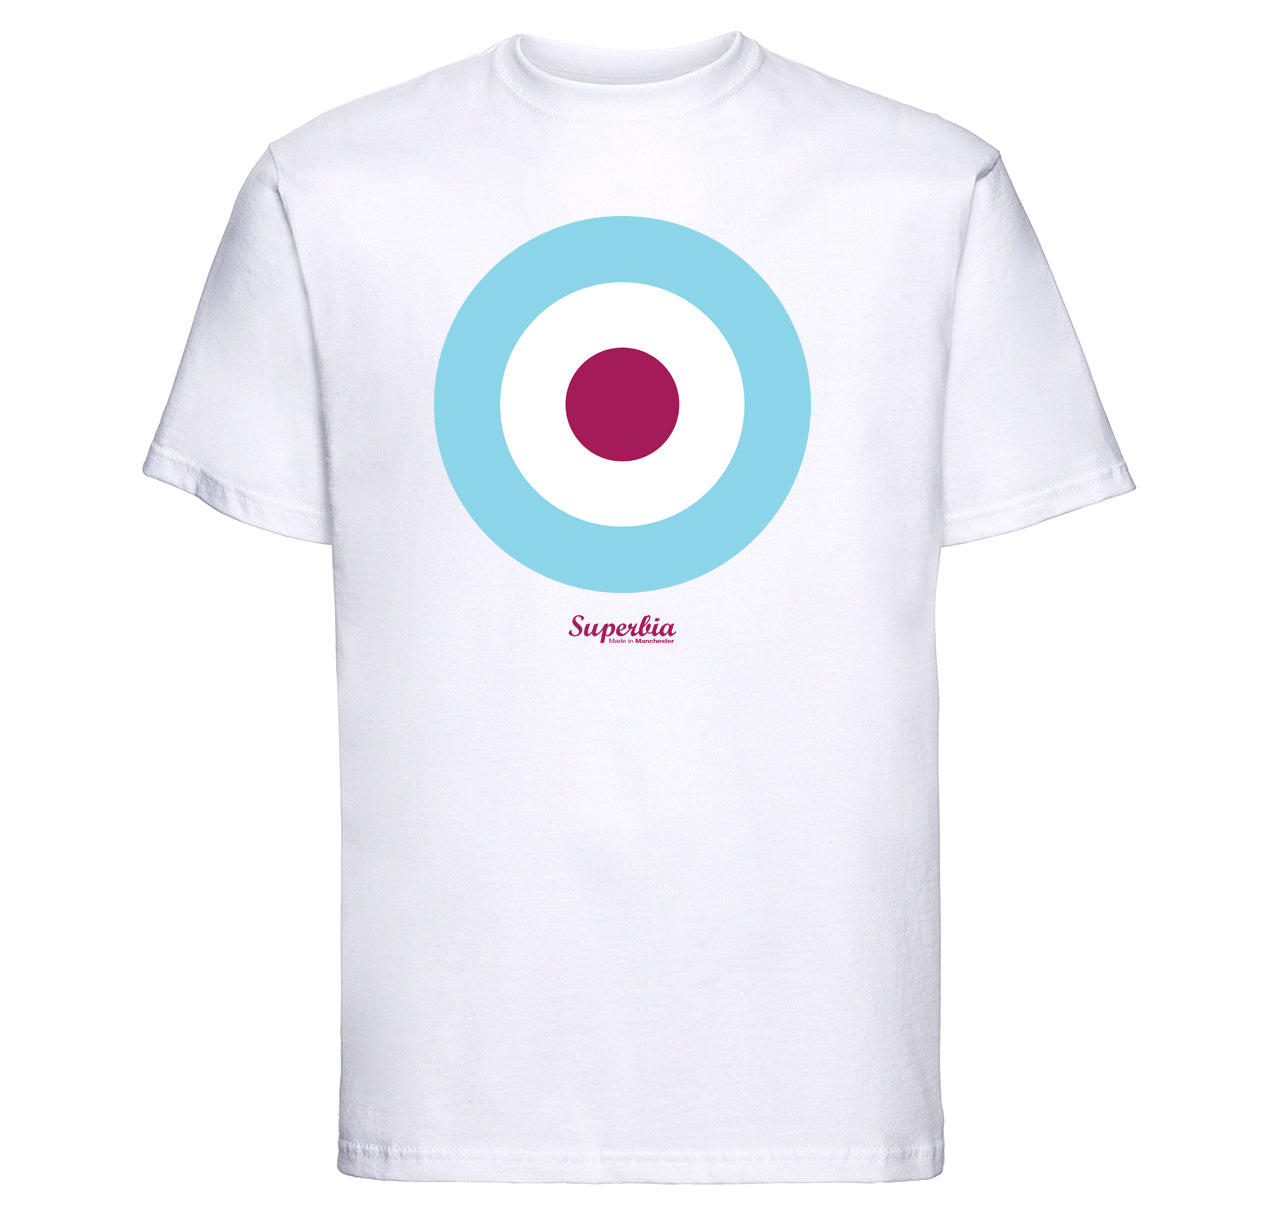 Superbia Target T-Shirt